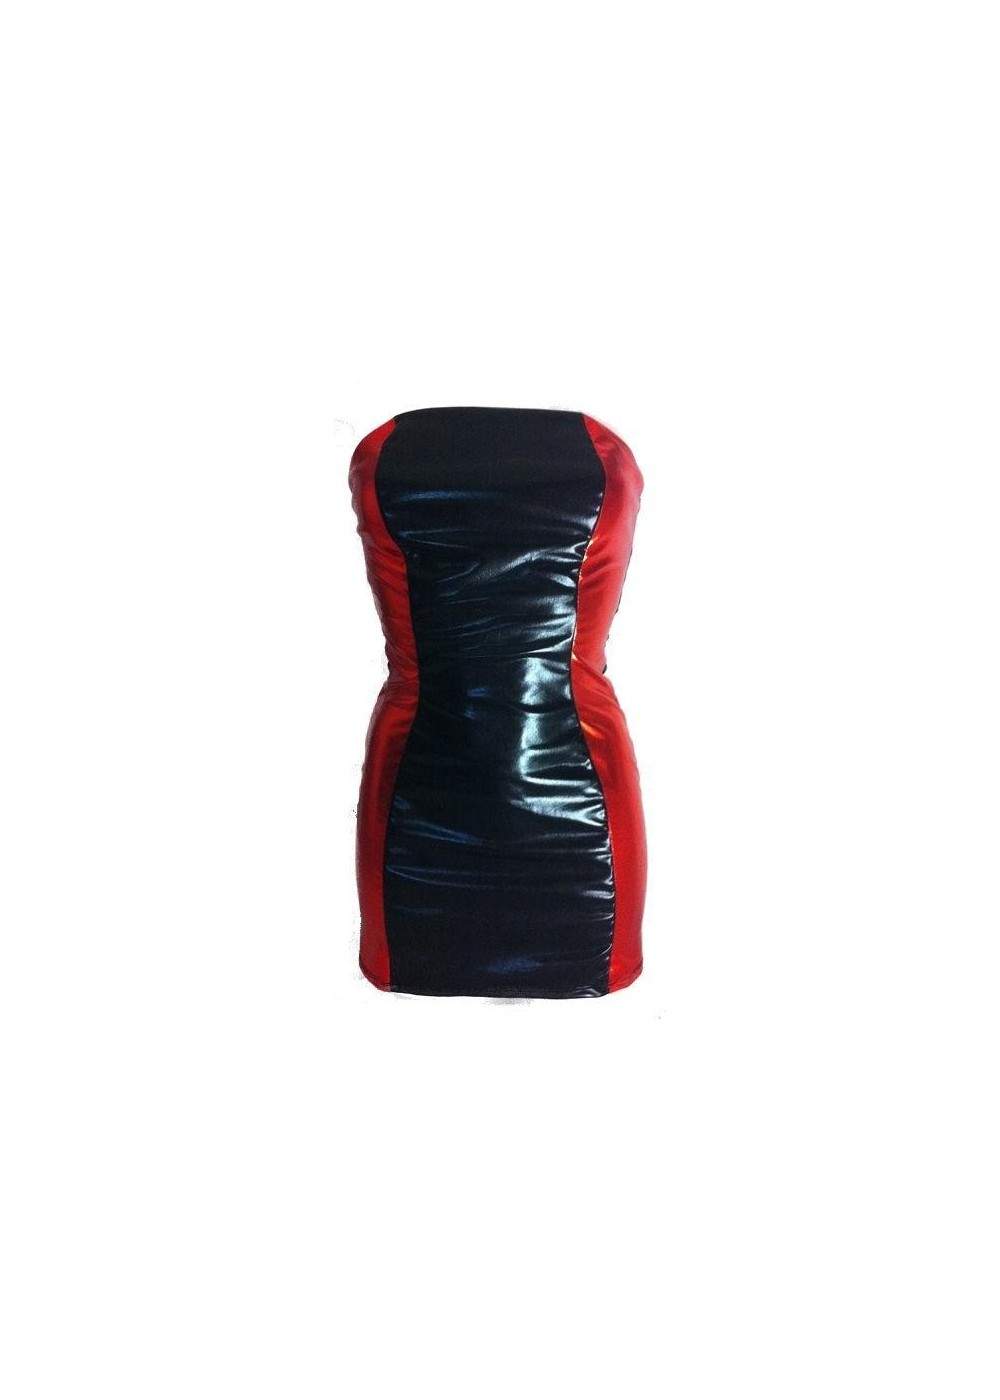 Leder-Optik BANDEAU-Kleid schwarz rot Rabatt 11% - 